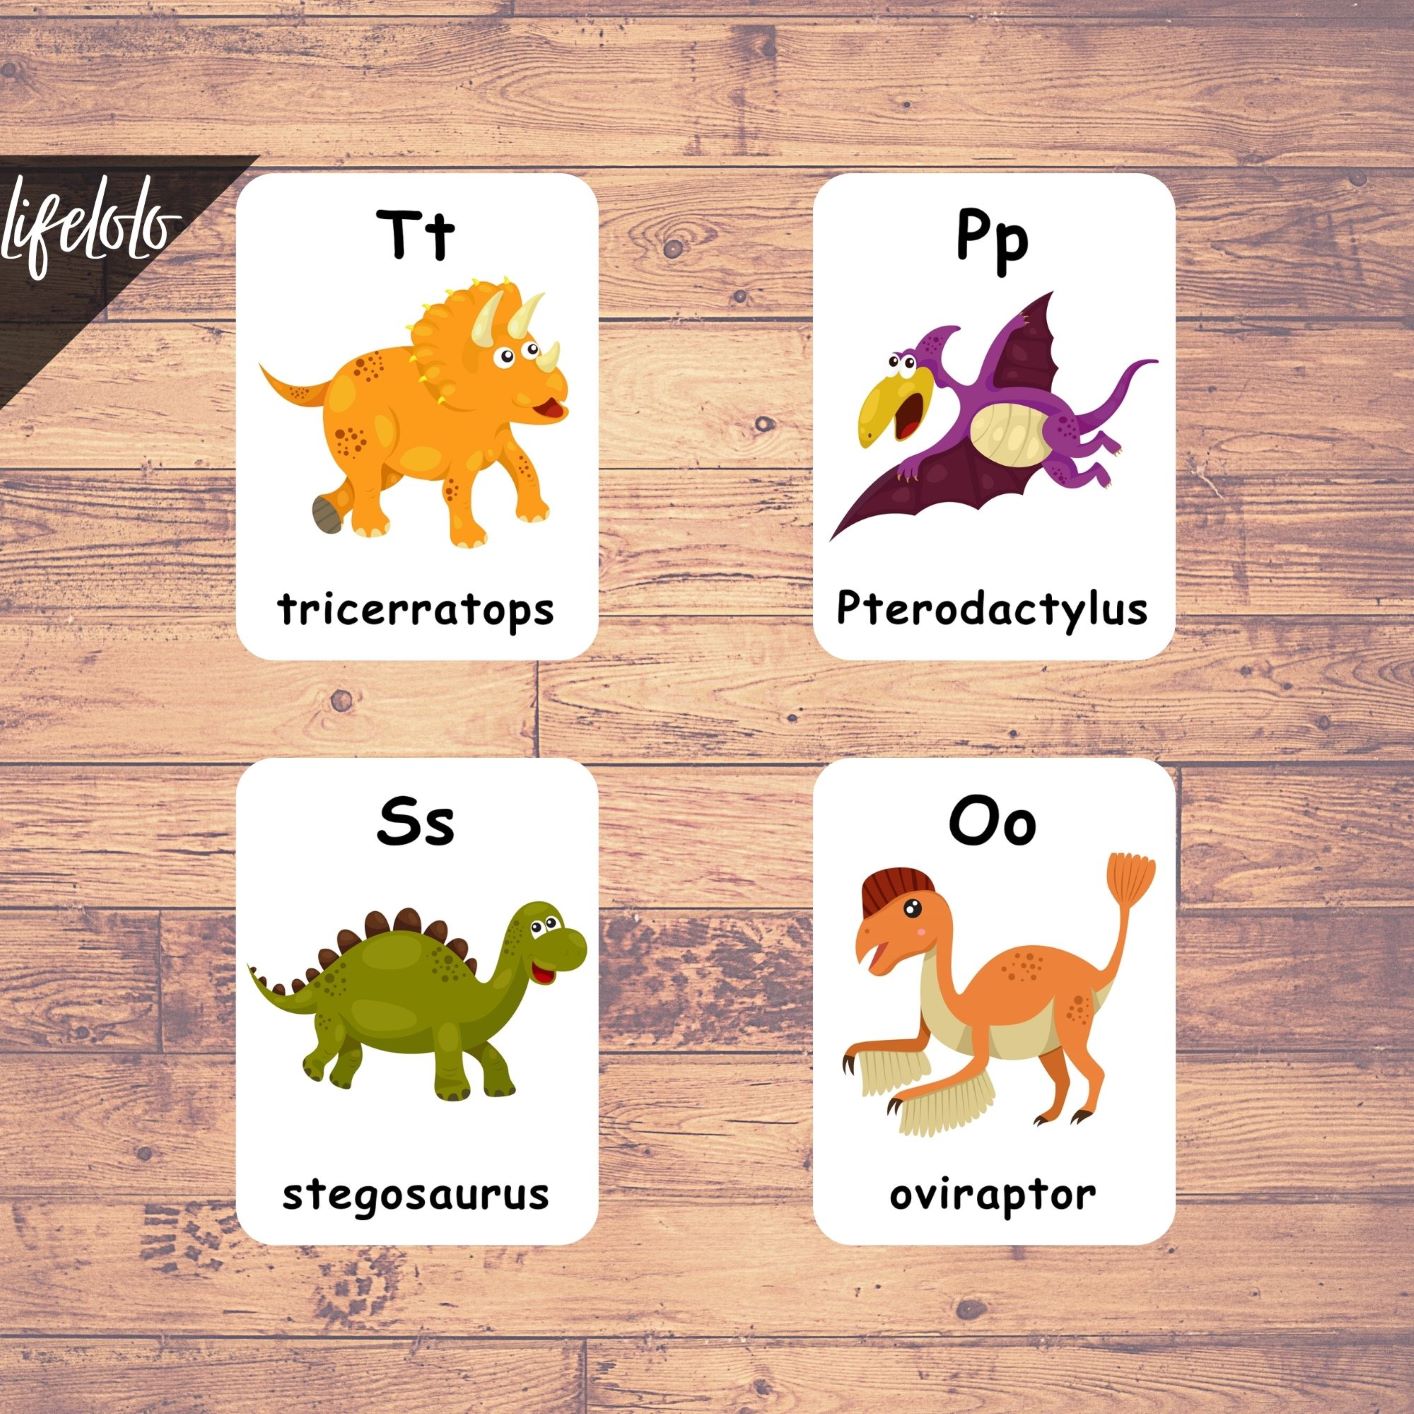 Dinosaur Alphabets 26 Flash Cards Homeschool Montessori English 